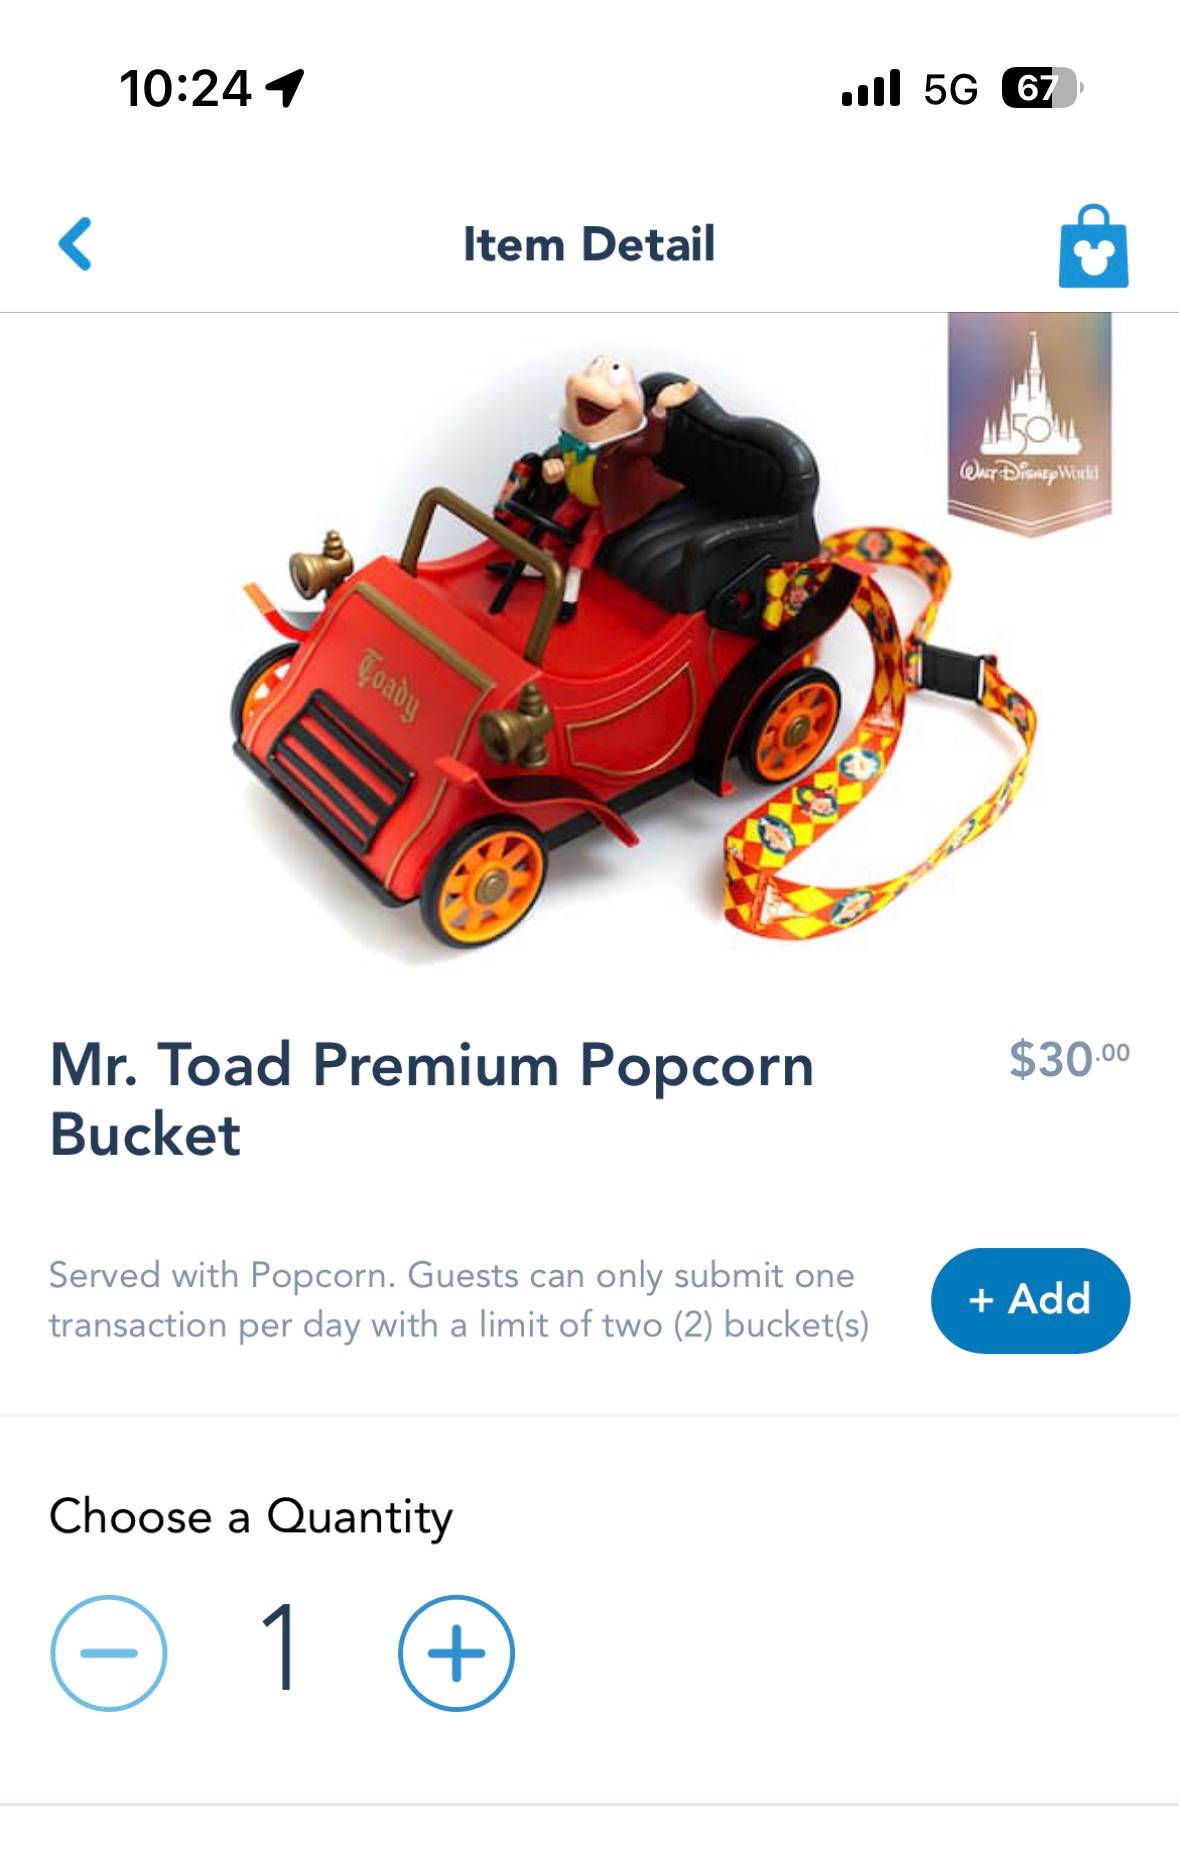 Mr. Toad's Wild Ride popcorn bucket